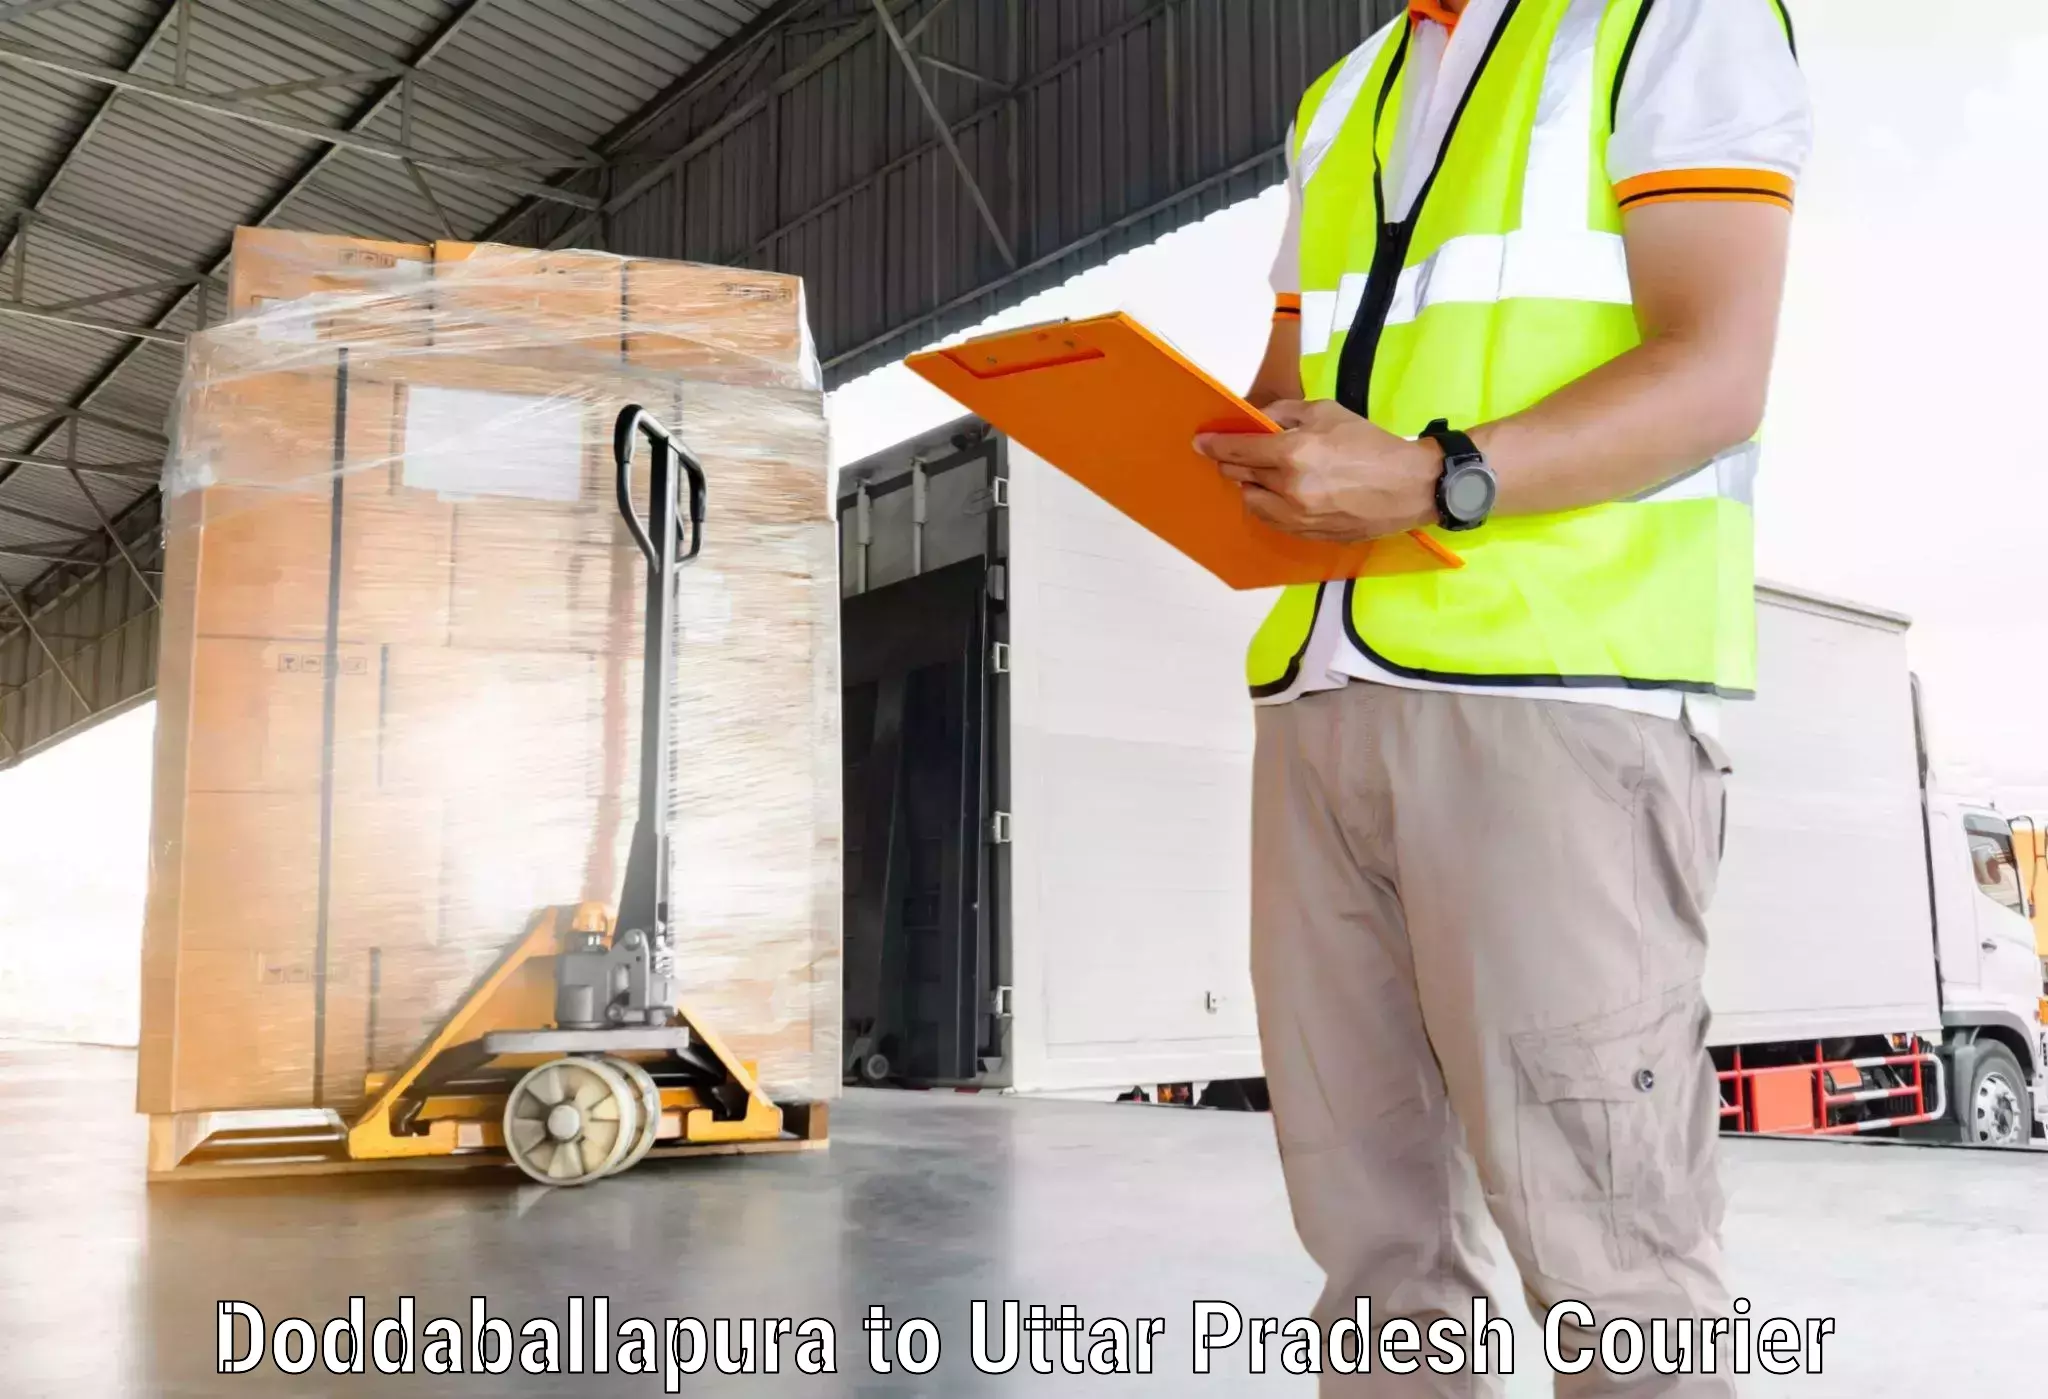 Business shipping needs Doddaballapura to Ambedkar Nagar